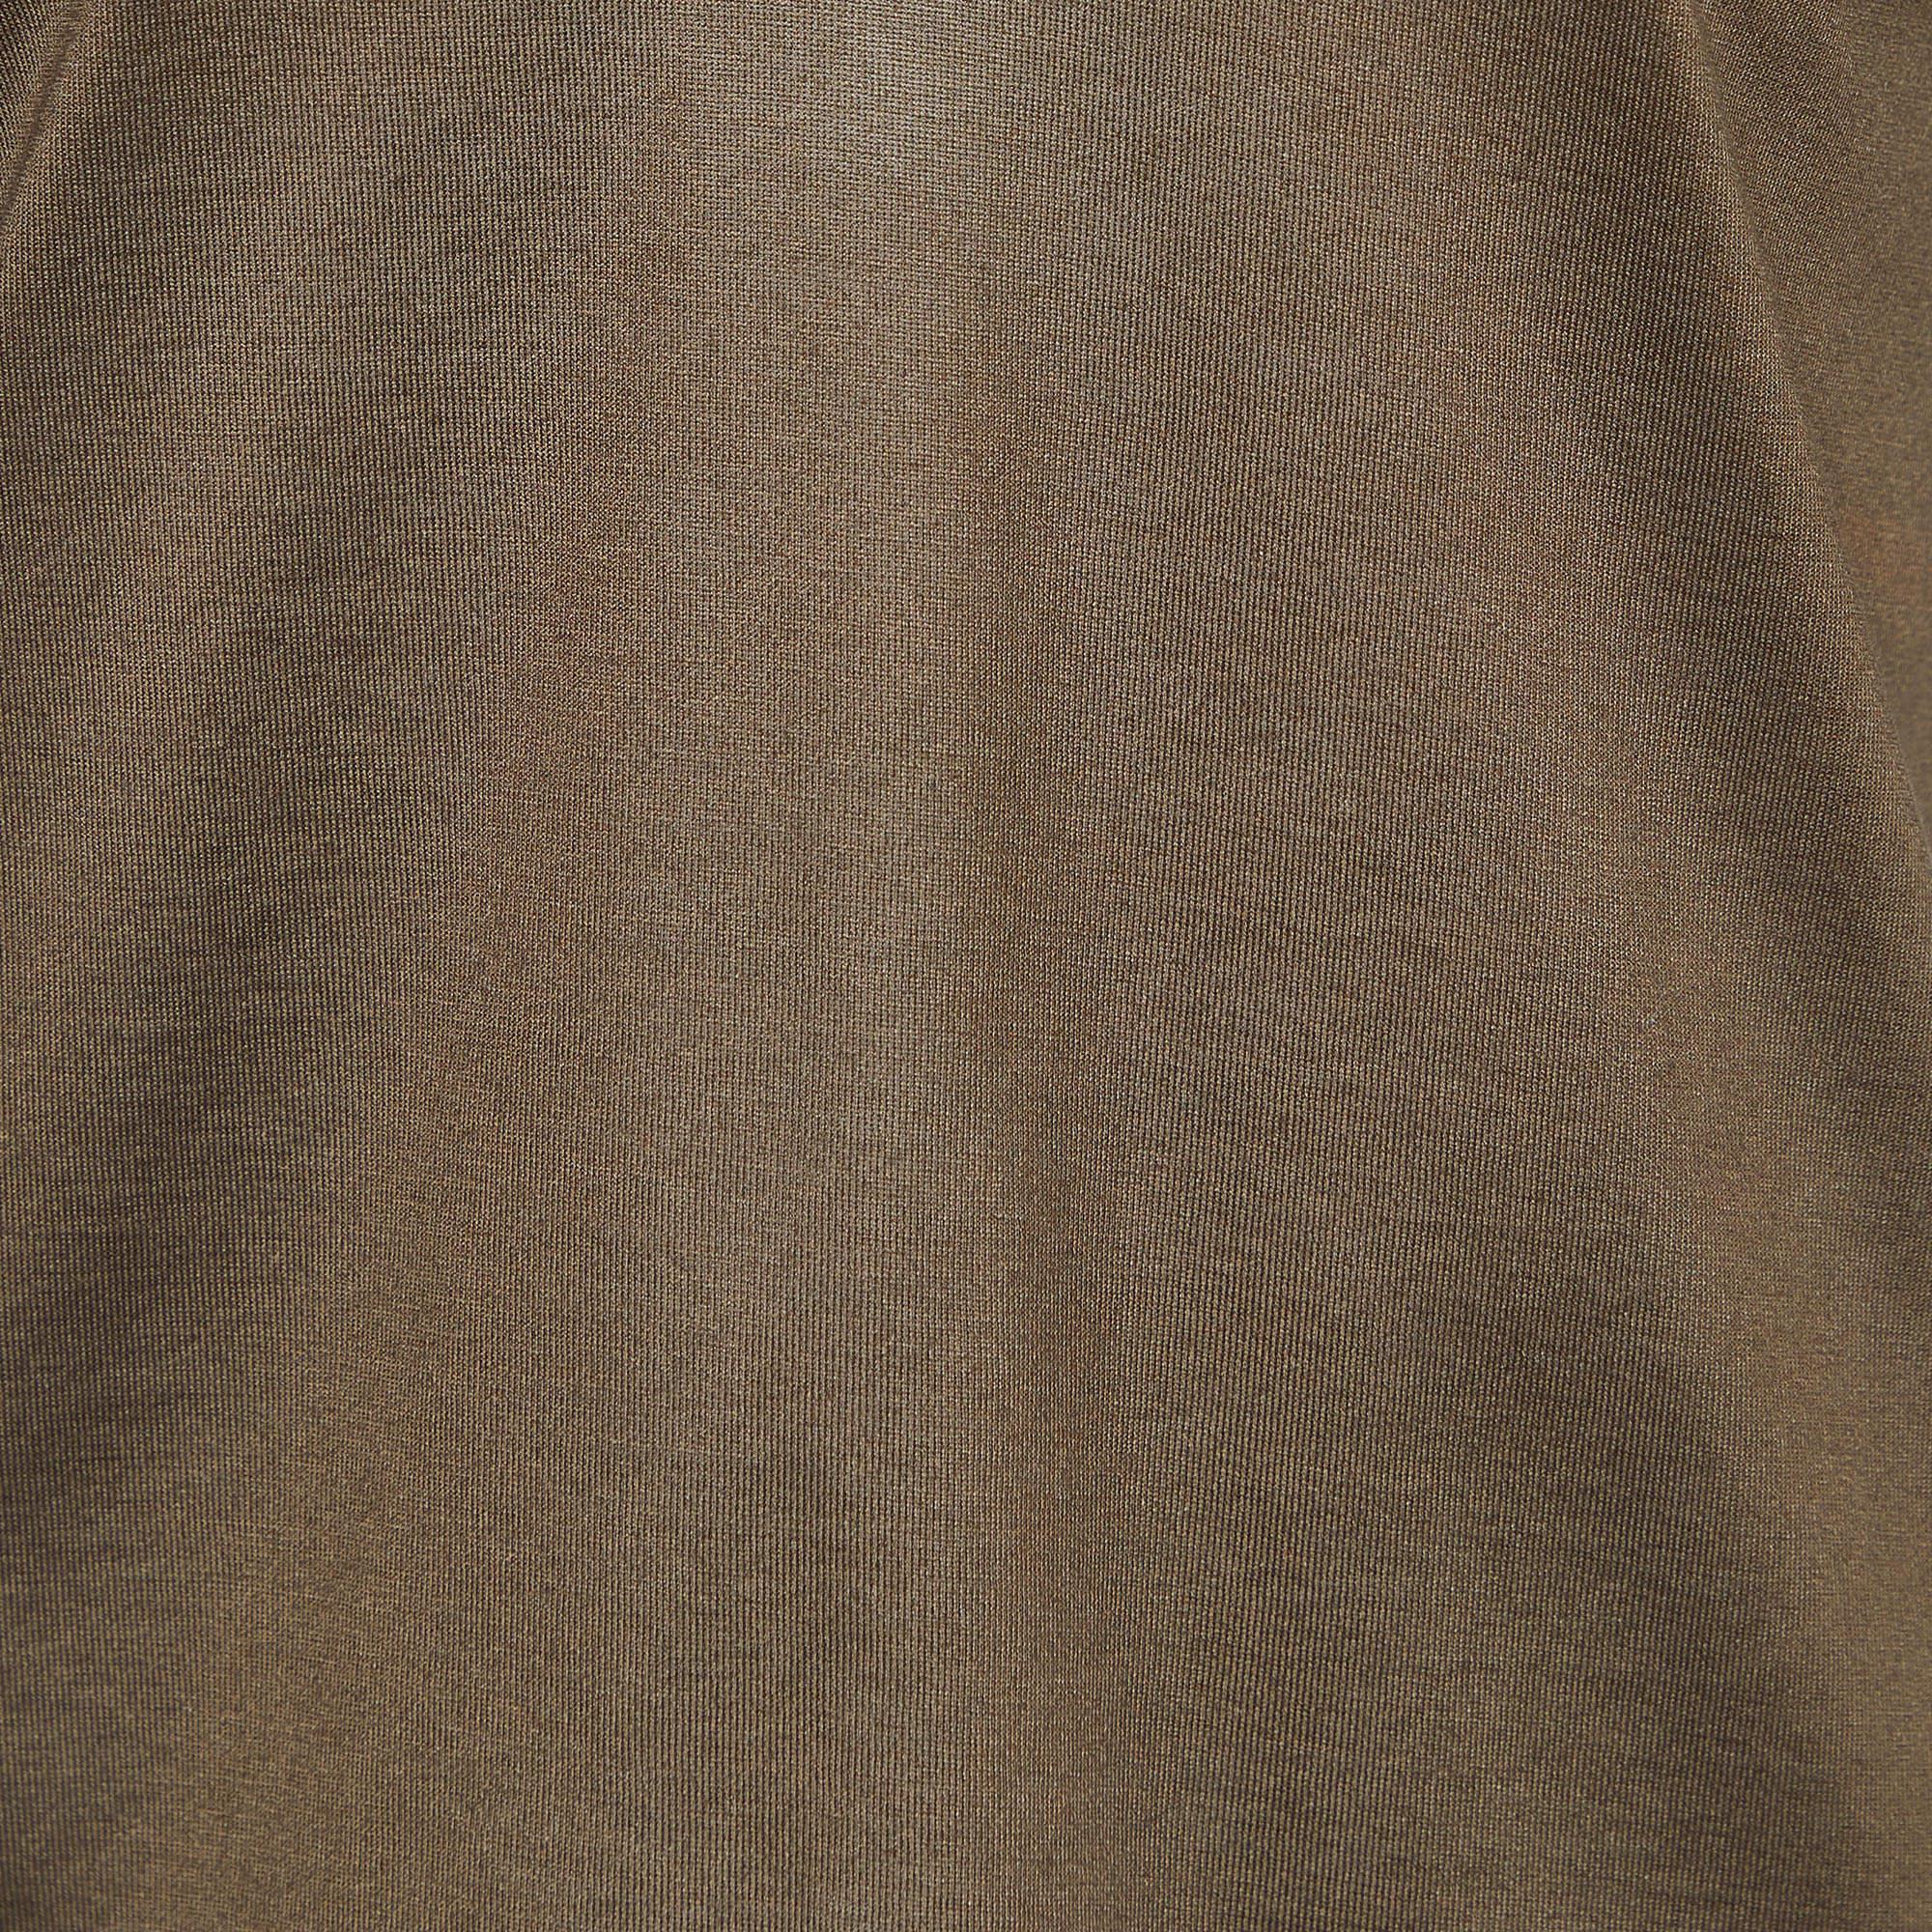 Black Prada Brown Cotton Knit V-Neck t-Shirt L